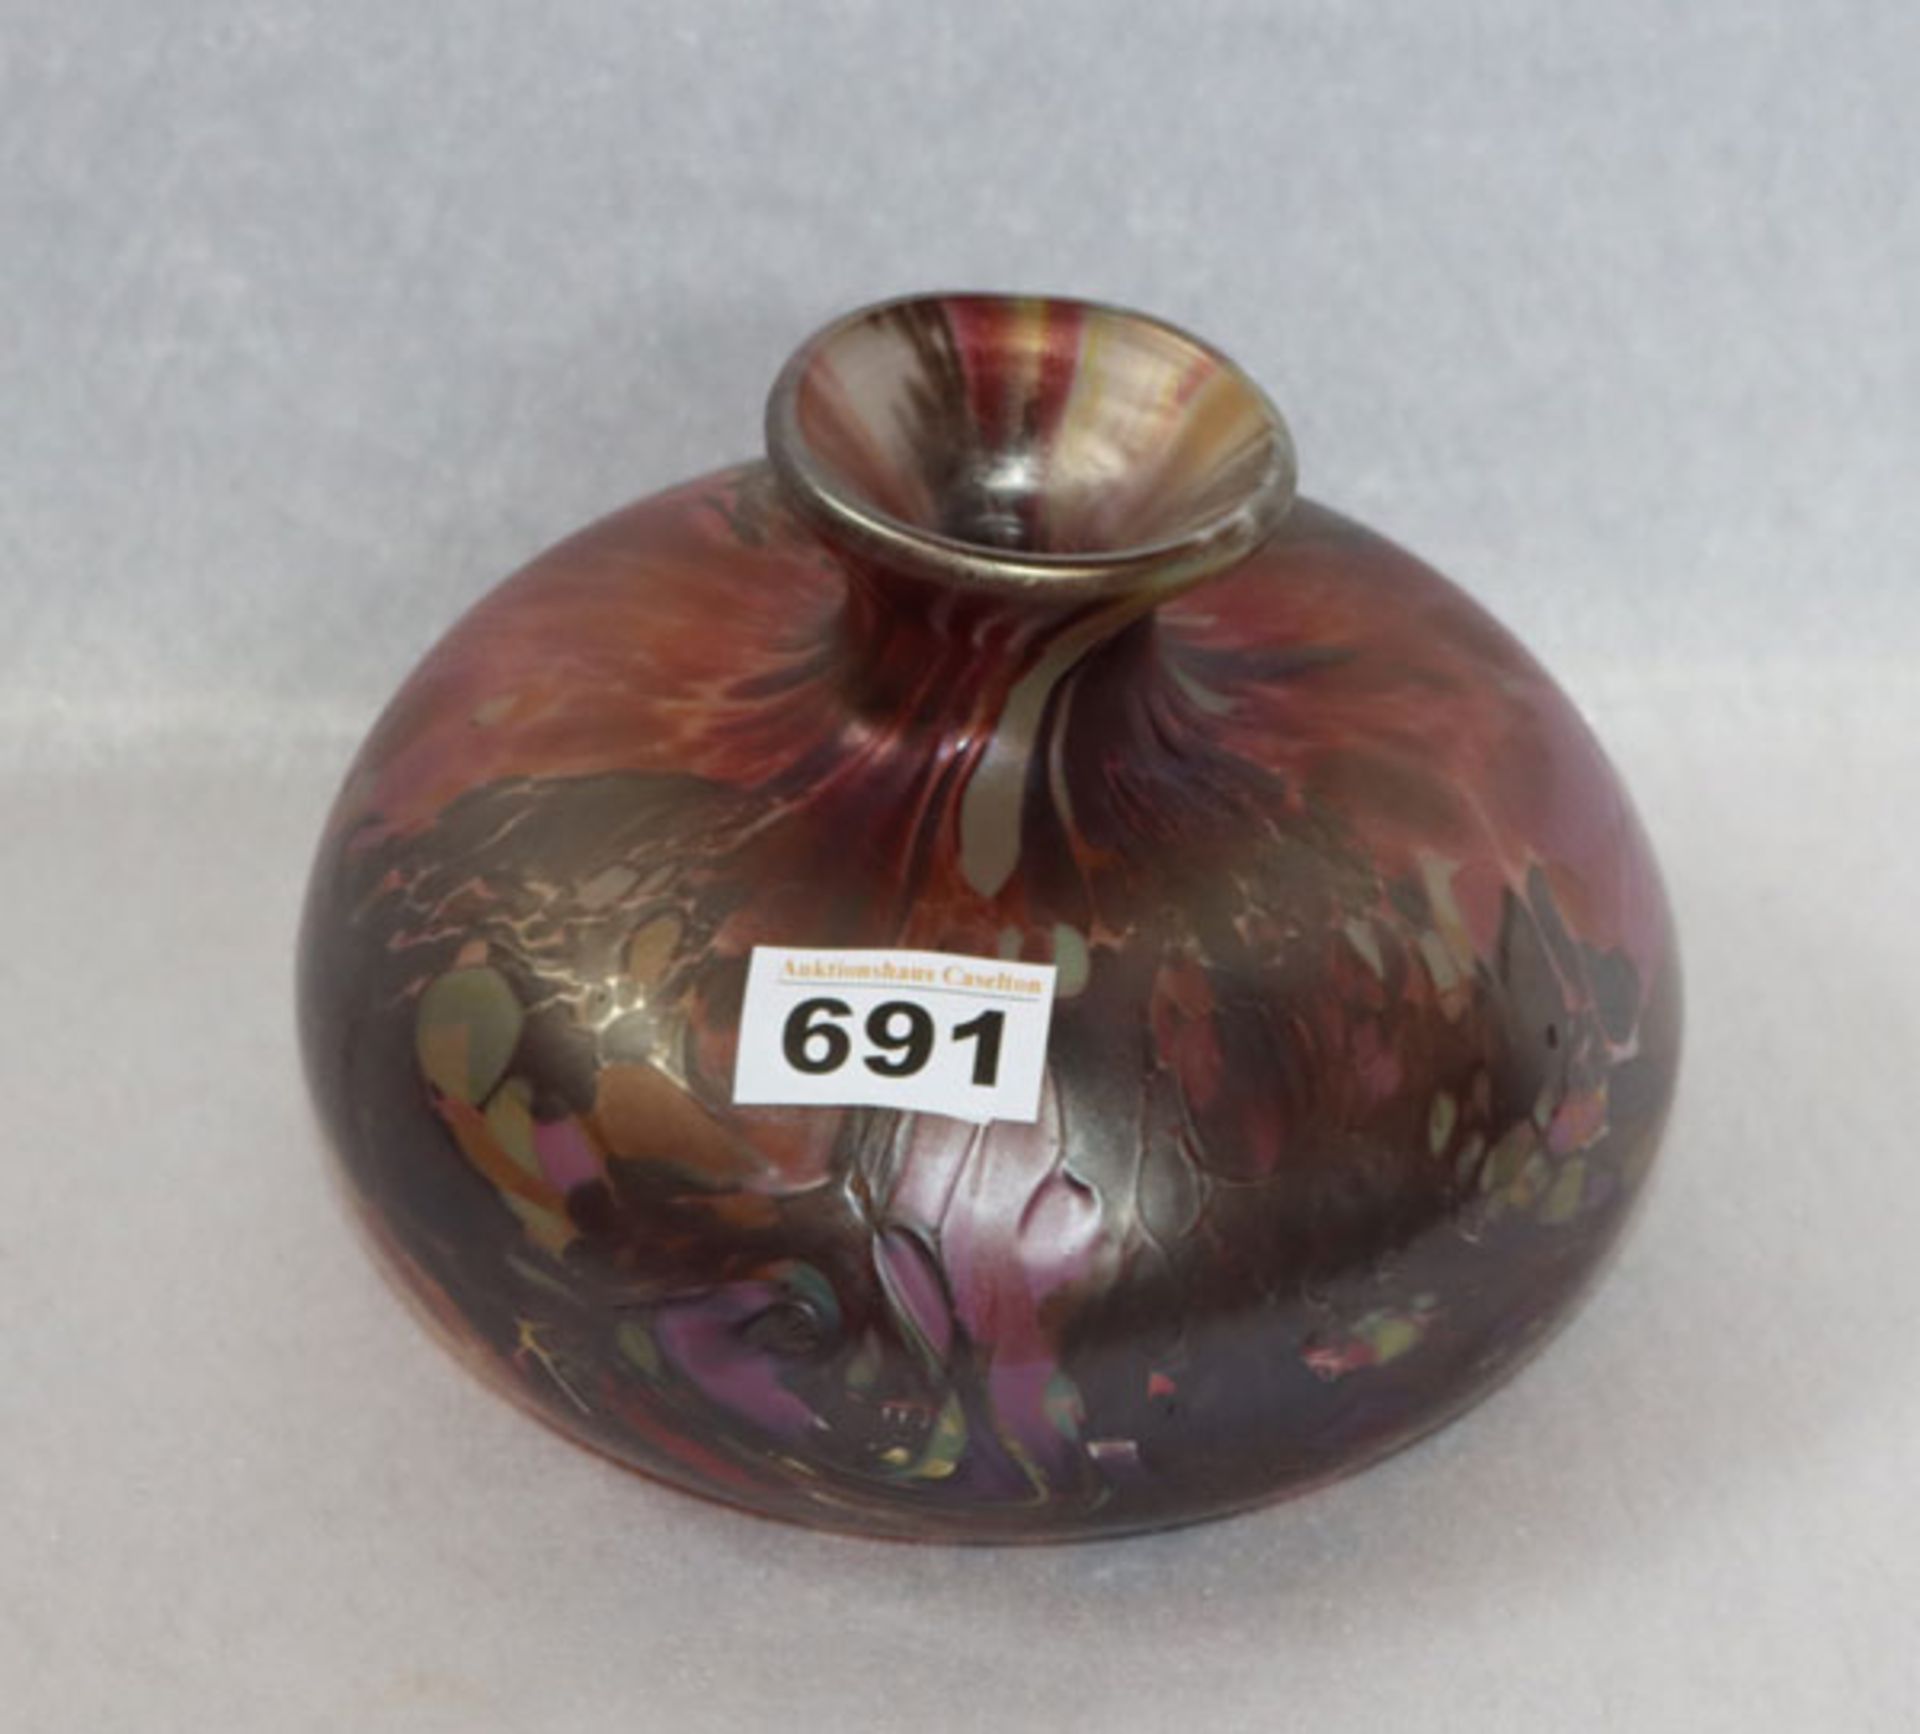 Studioglas-Vase, farbloses Glas mit lila/pink eingeschmolzenen Farbkrösel, bauchiger Korpus,